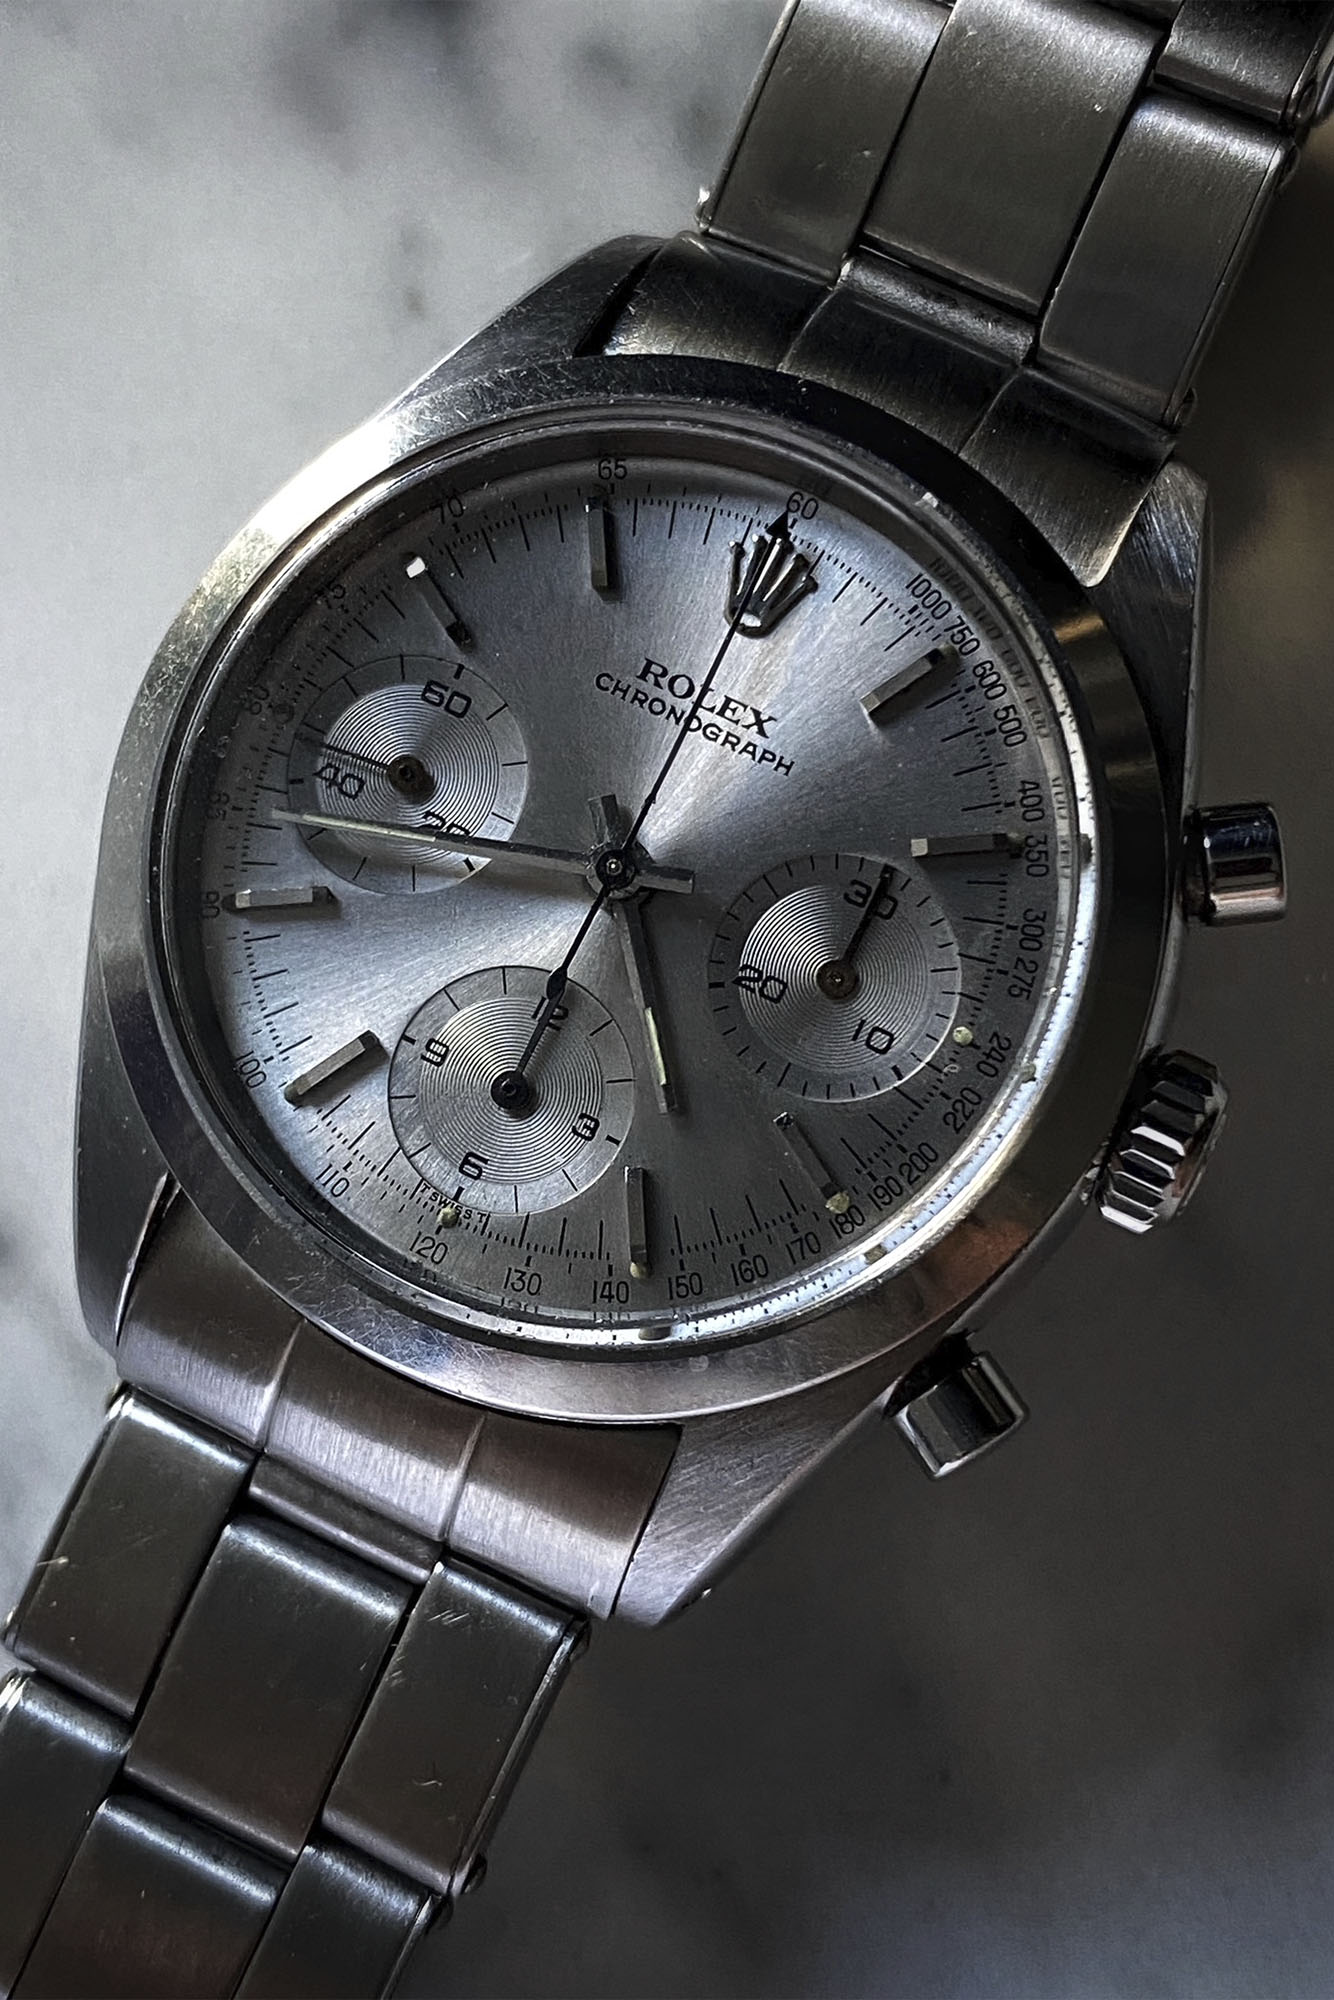 Phillip Toledano's Watch collection